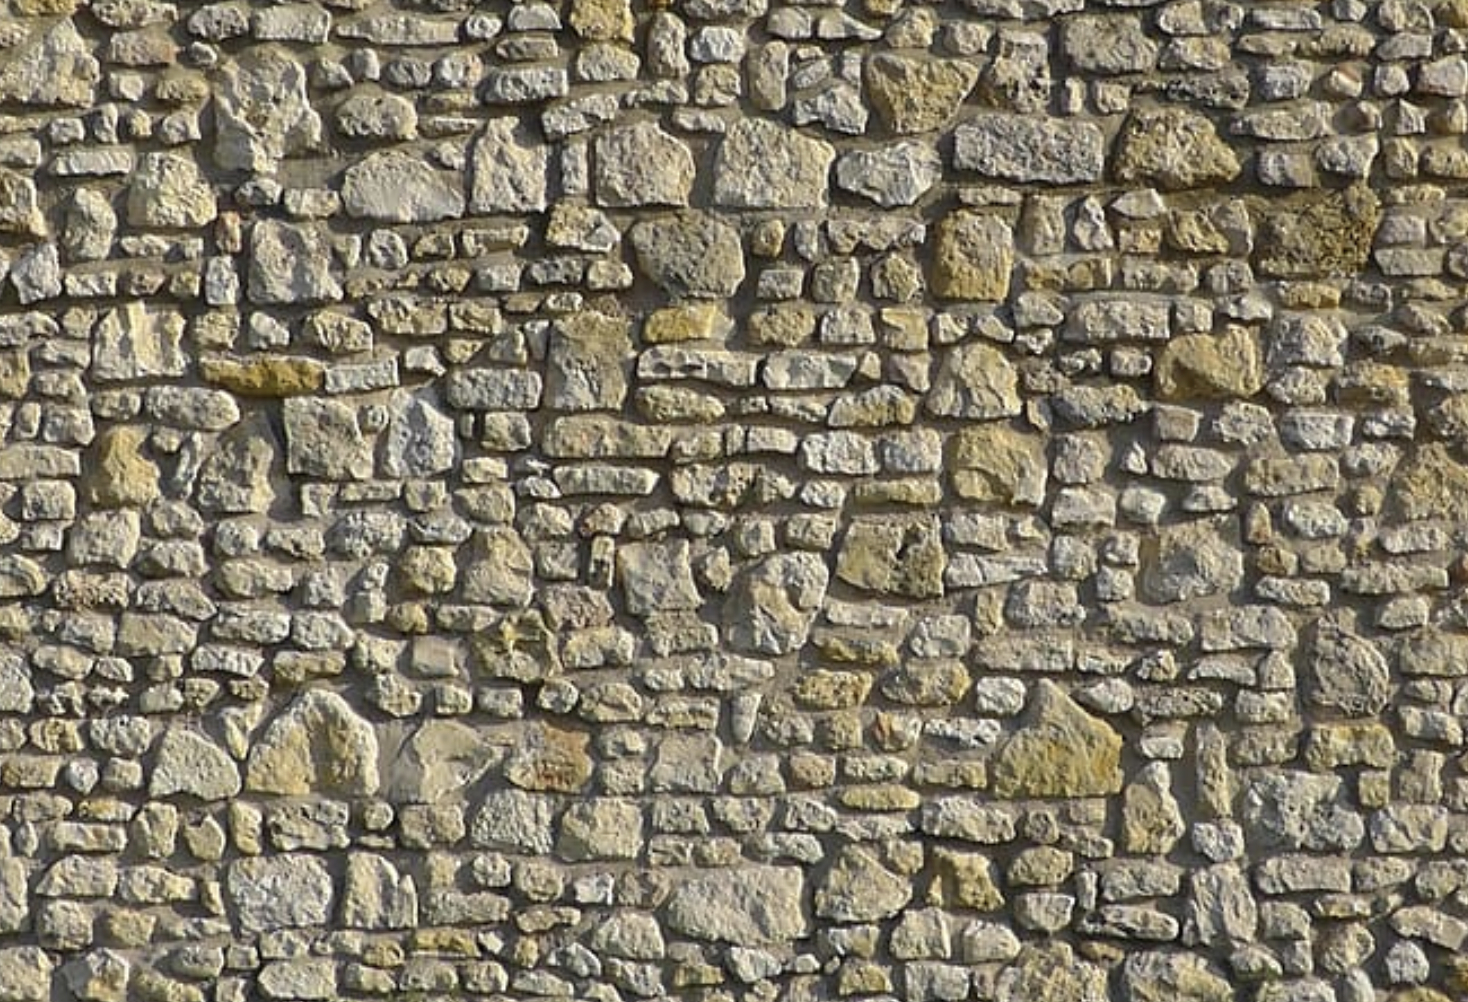 this image shows stone masonry in Rocklin, California